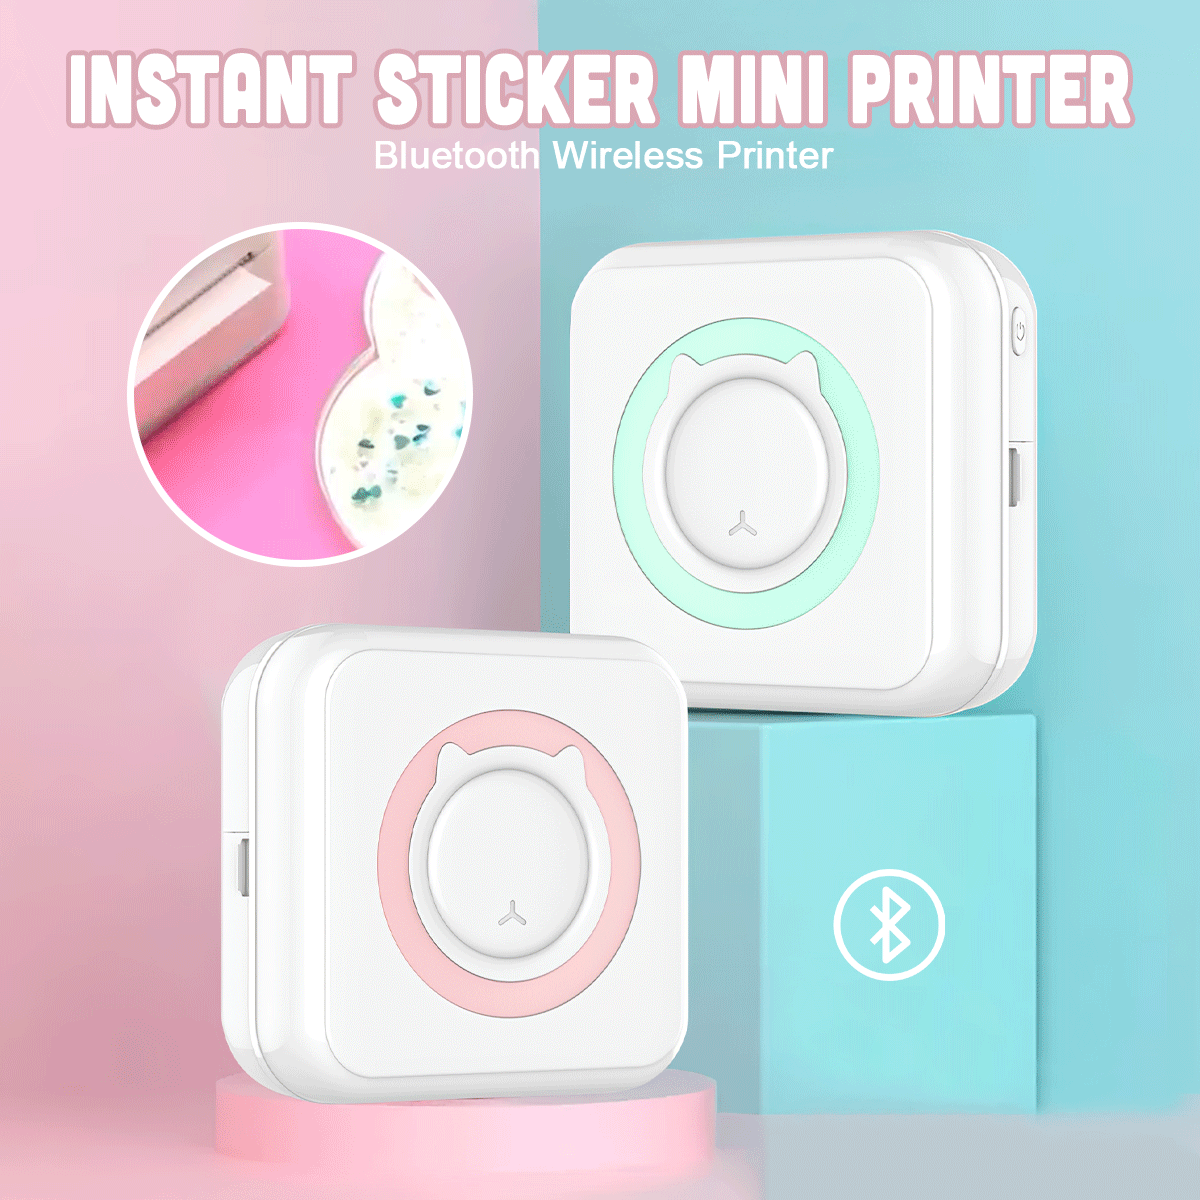 Instant Sticker Mini Printer